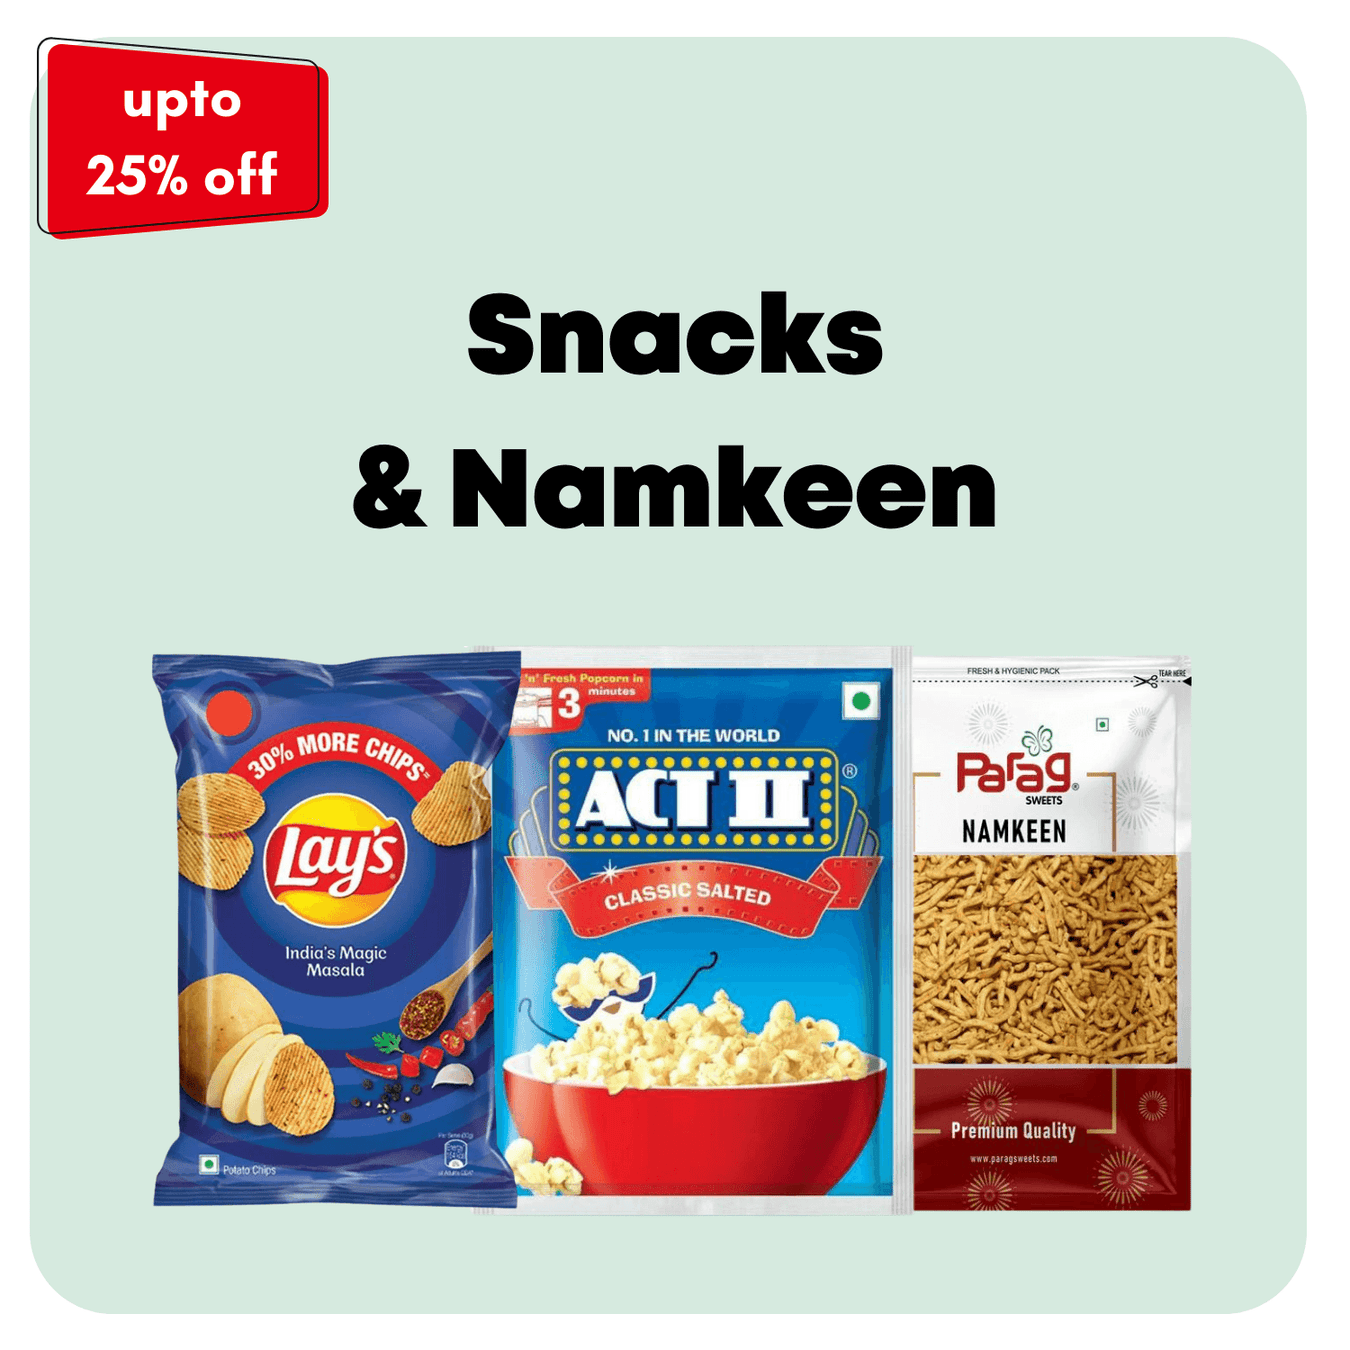 Snacks & Namkeen - Quick Pantry